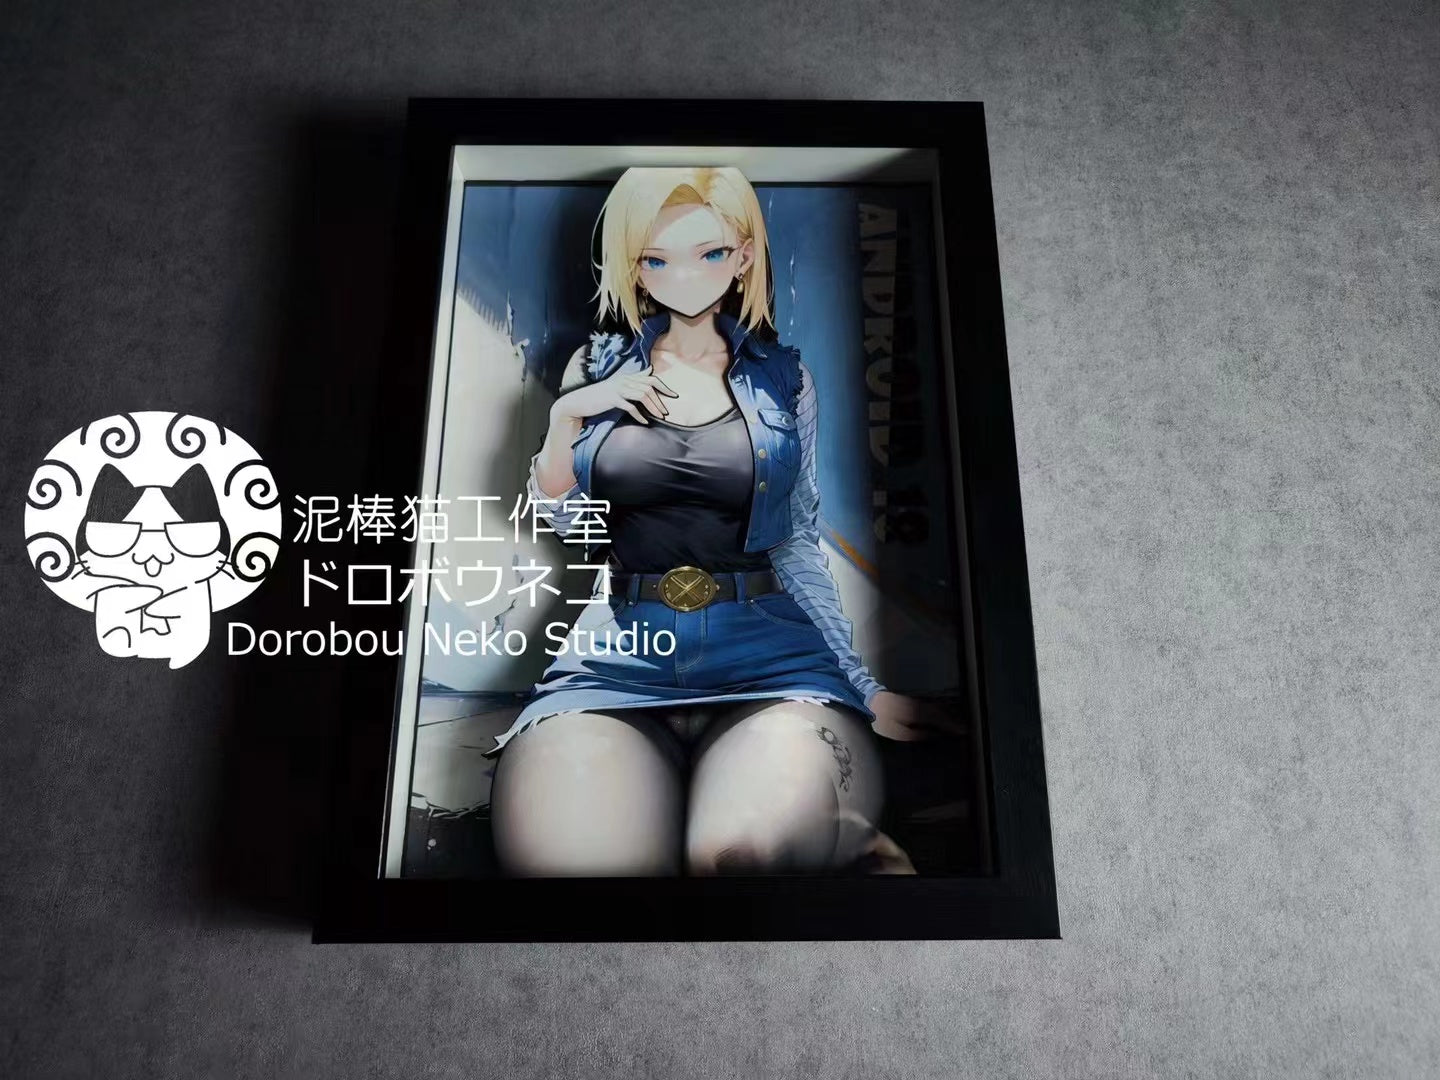 Dorobou Neko Studio - Android 18 3D Cast Off Poster Frame [DSMG-010]